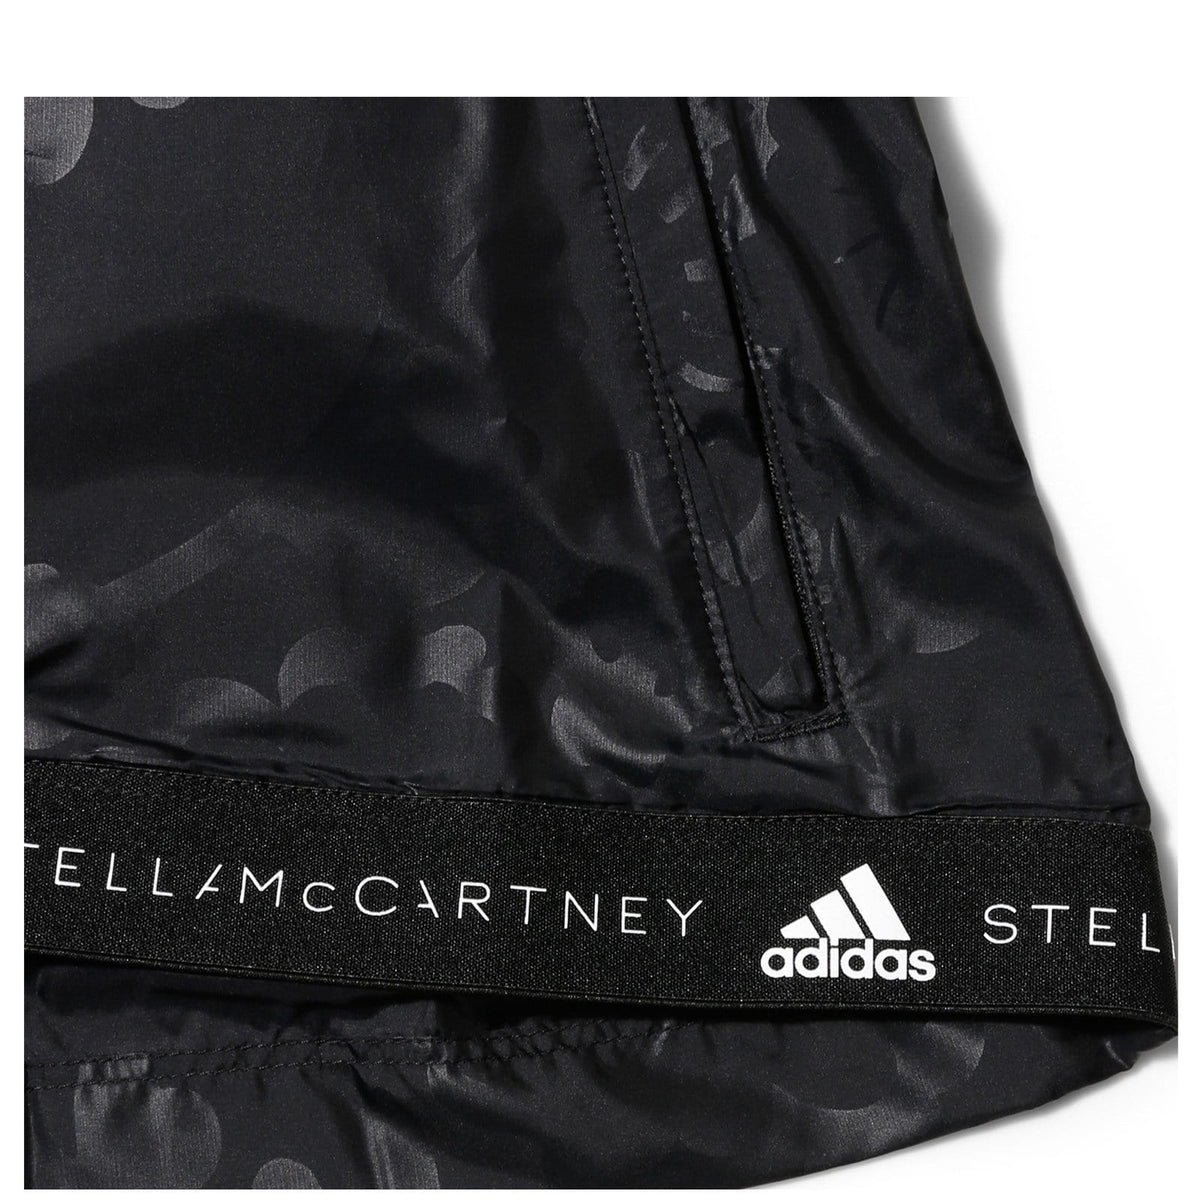 stella mccartney adidas black jacket